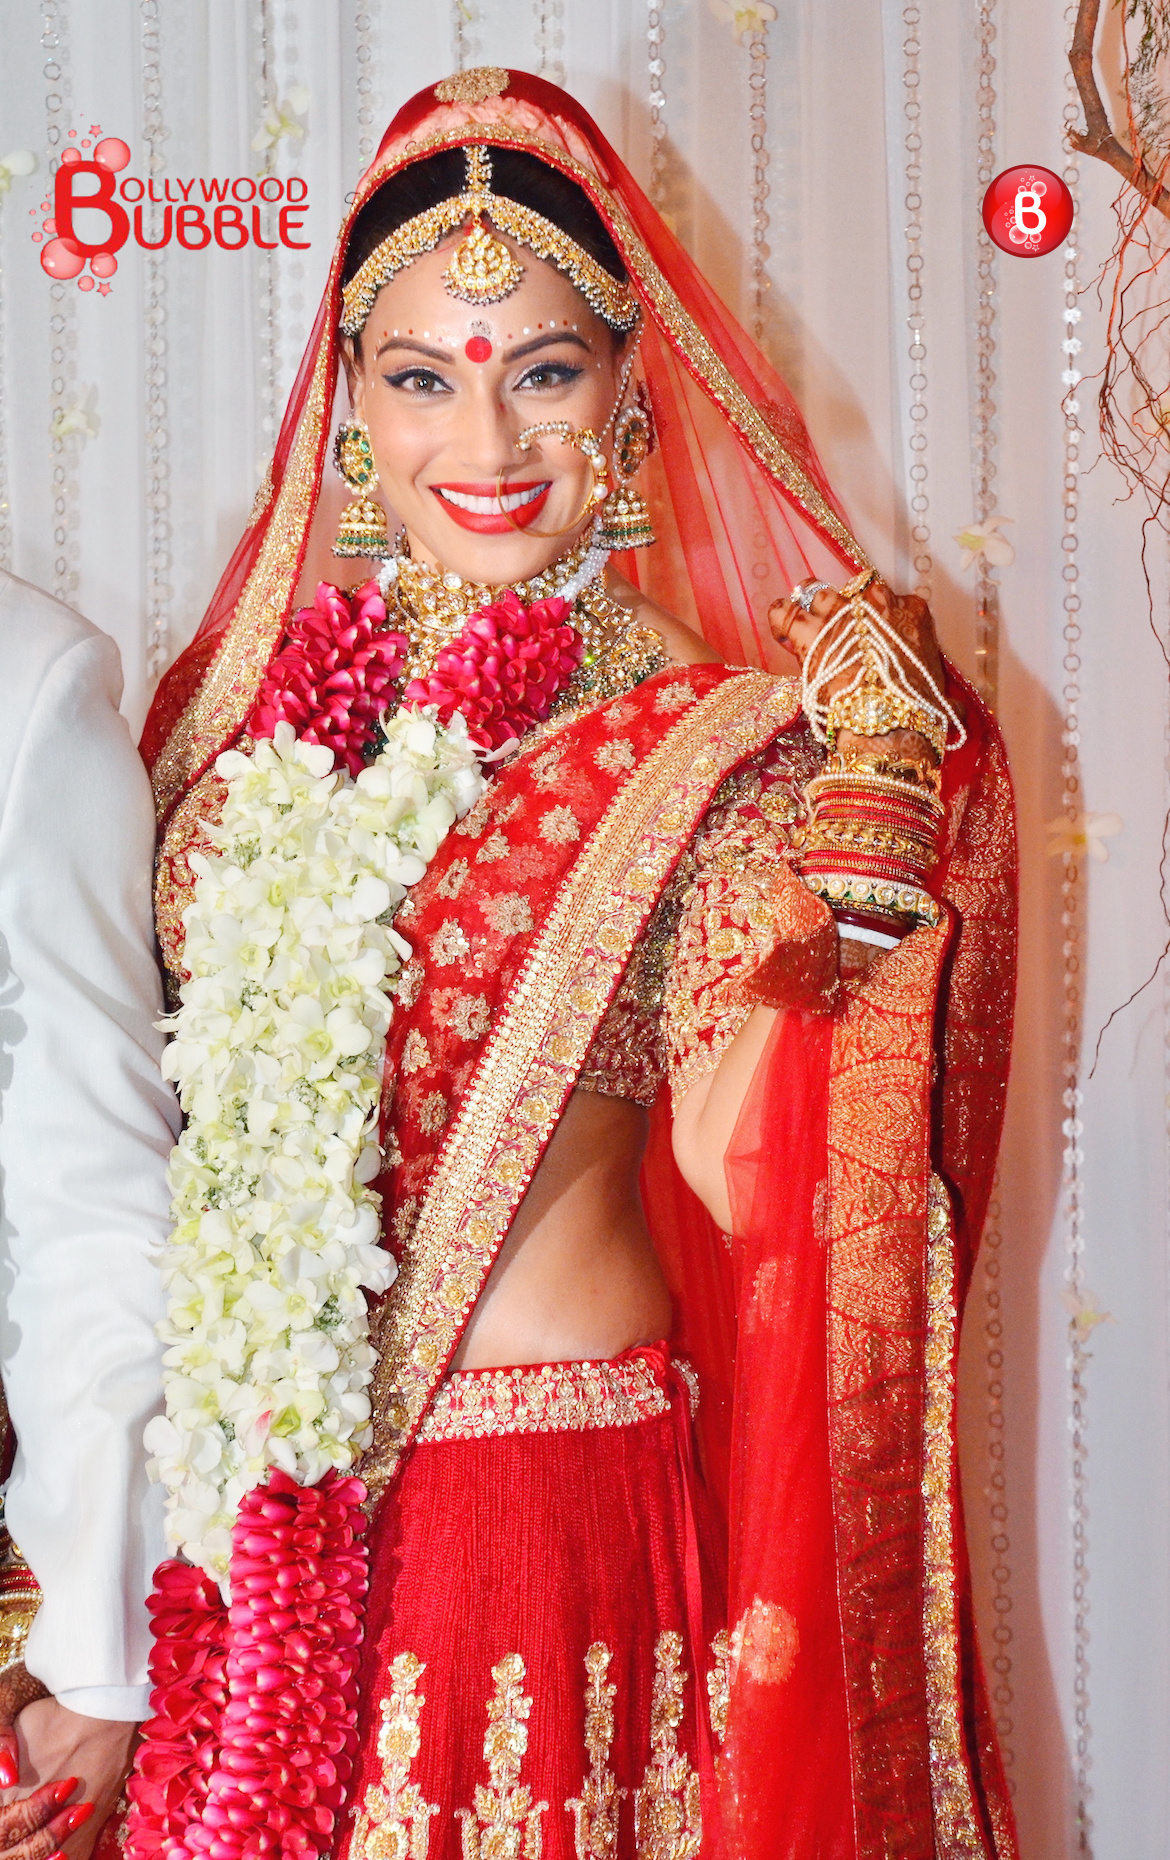 Bipasha Basu and Karan Singh Grover wedding